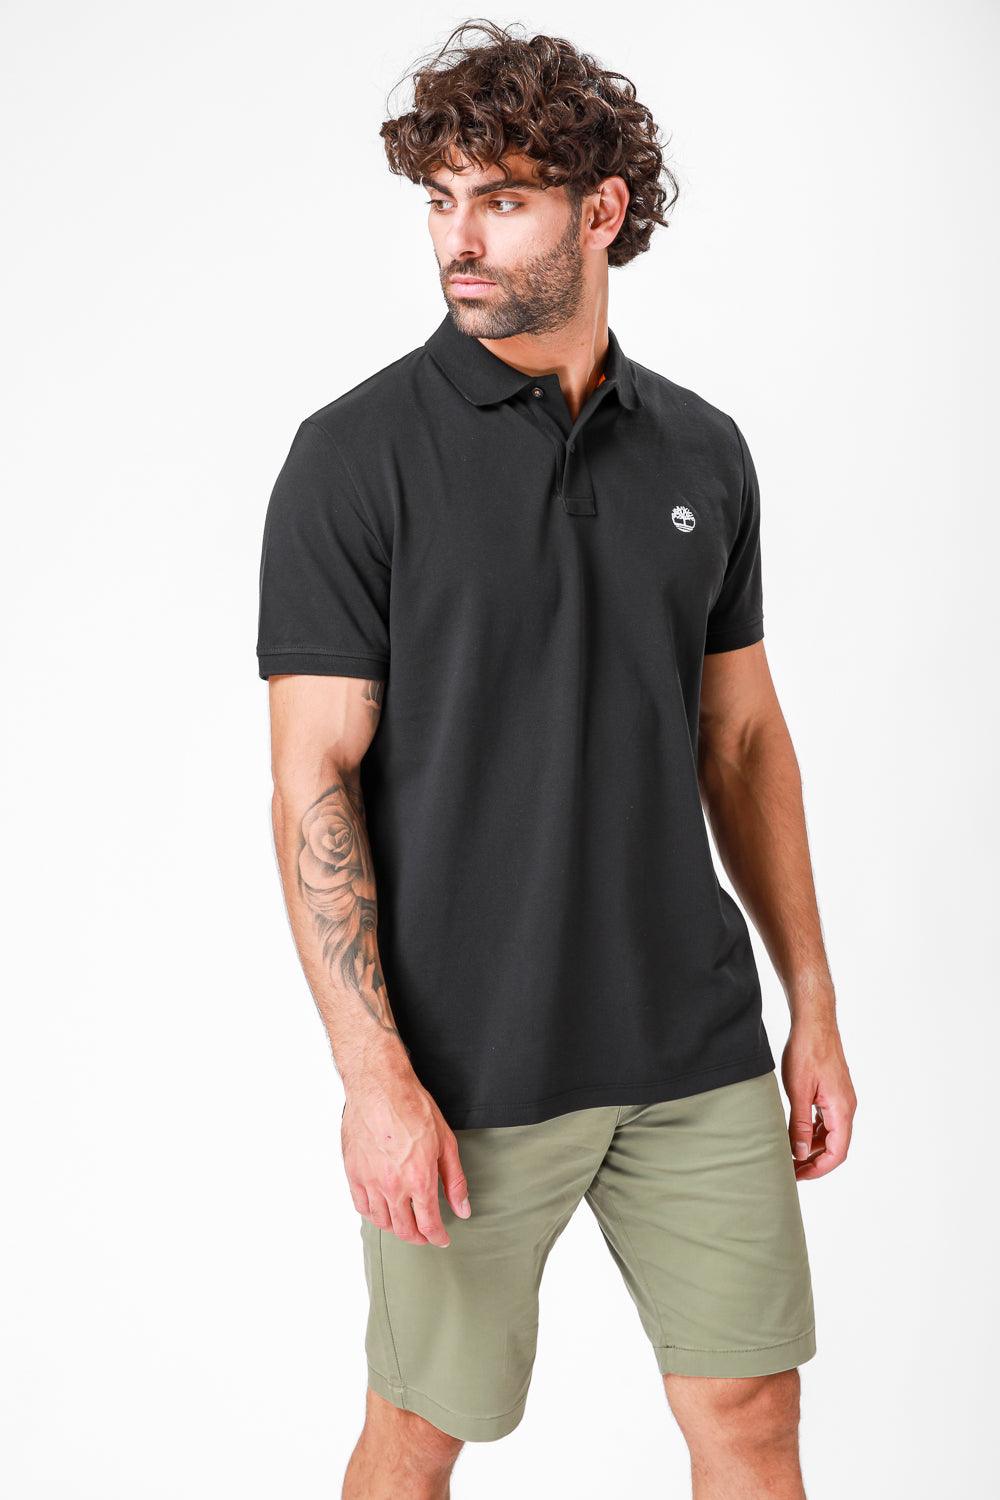 TIMBERLAND - חולצת פולו RIVER PIQUE שחורה - MASHBIR//365